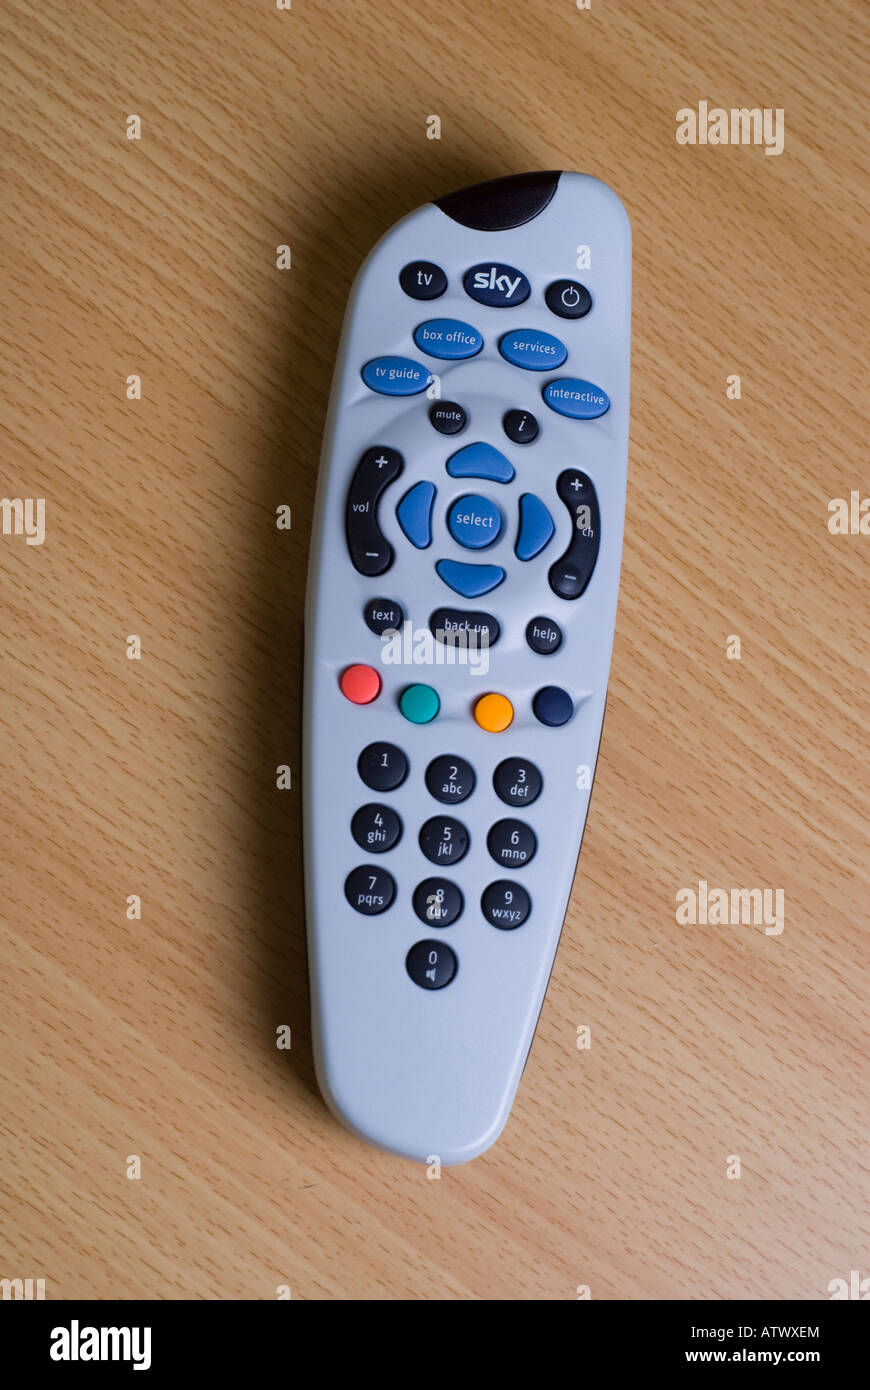 Sky TV remote control still life object Stock Photo